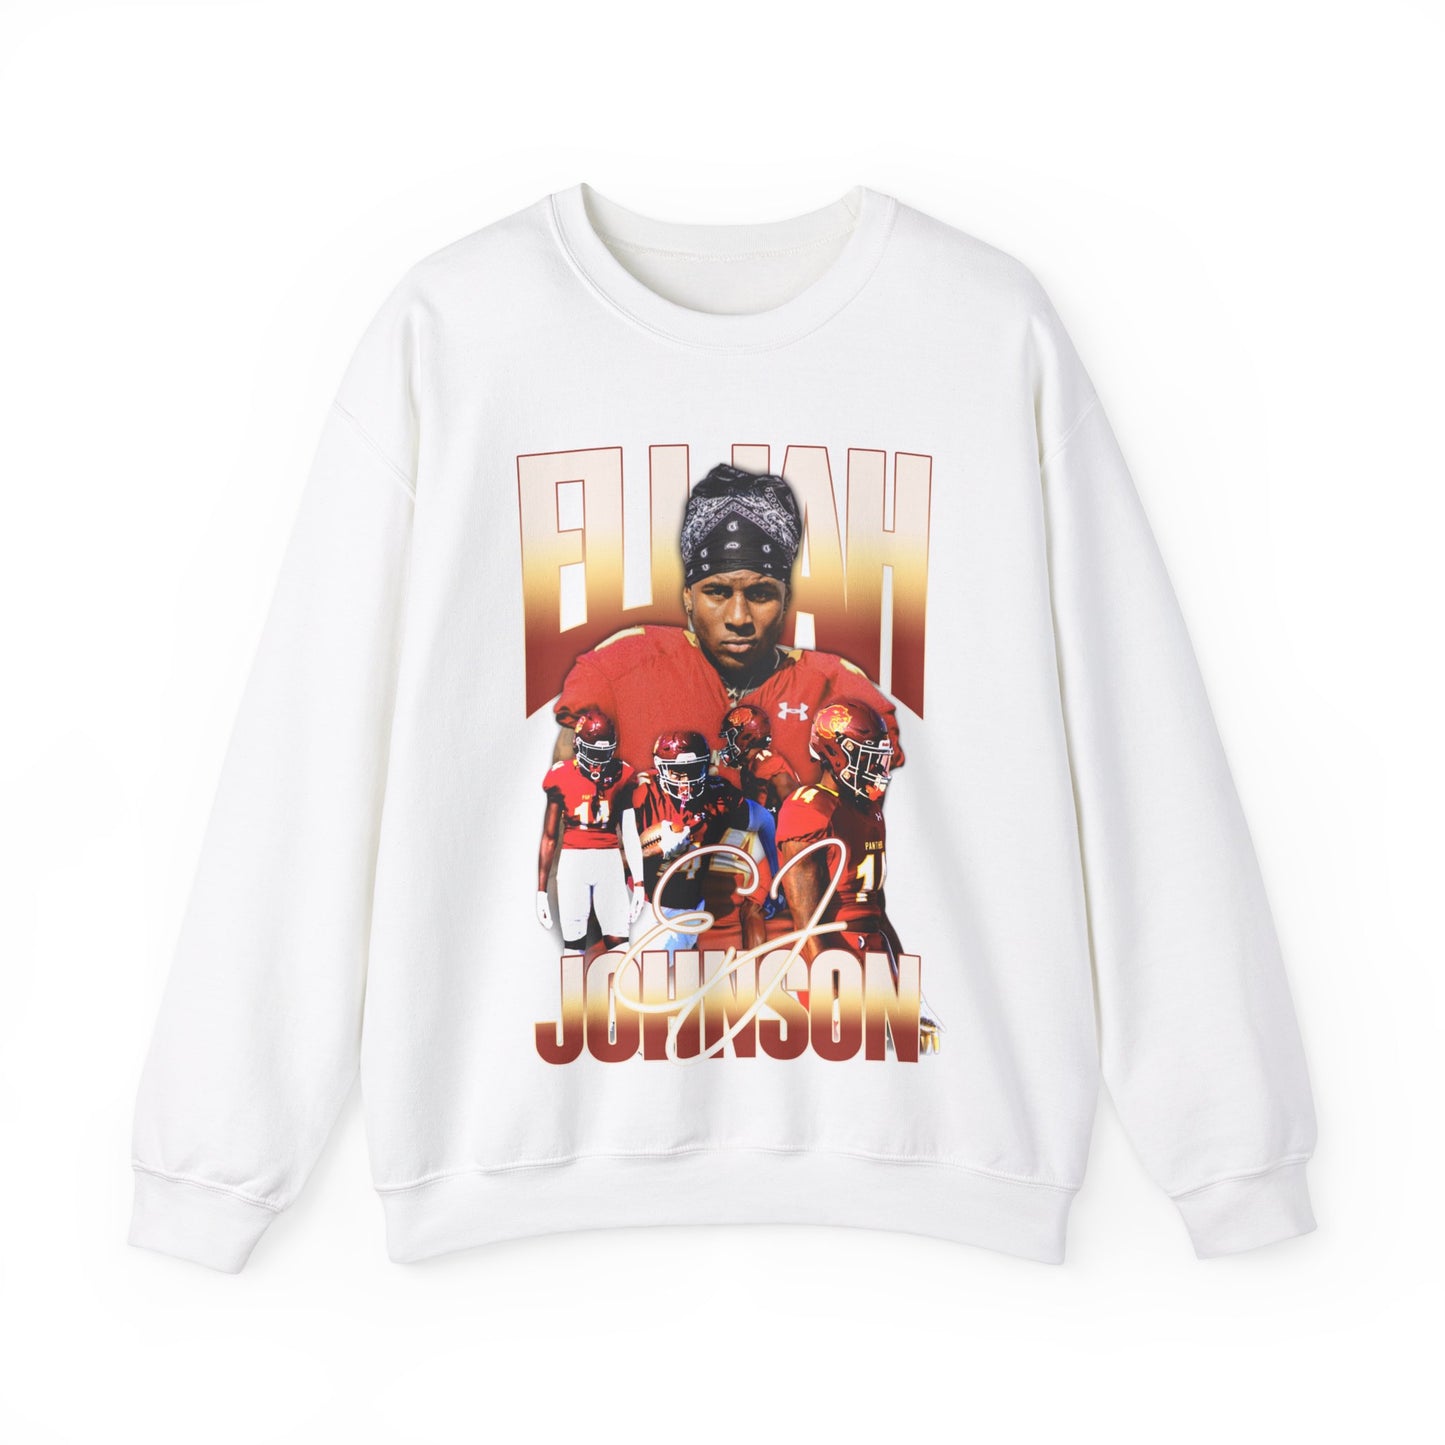 Elijah Johnson Crewneck Sweatshirt